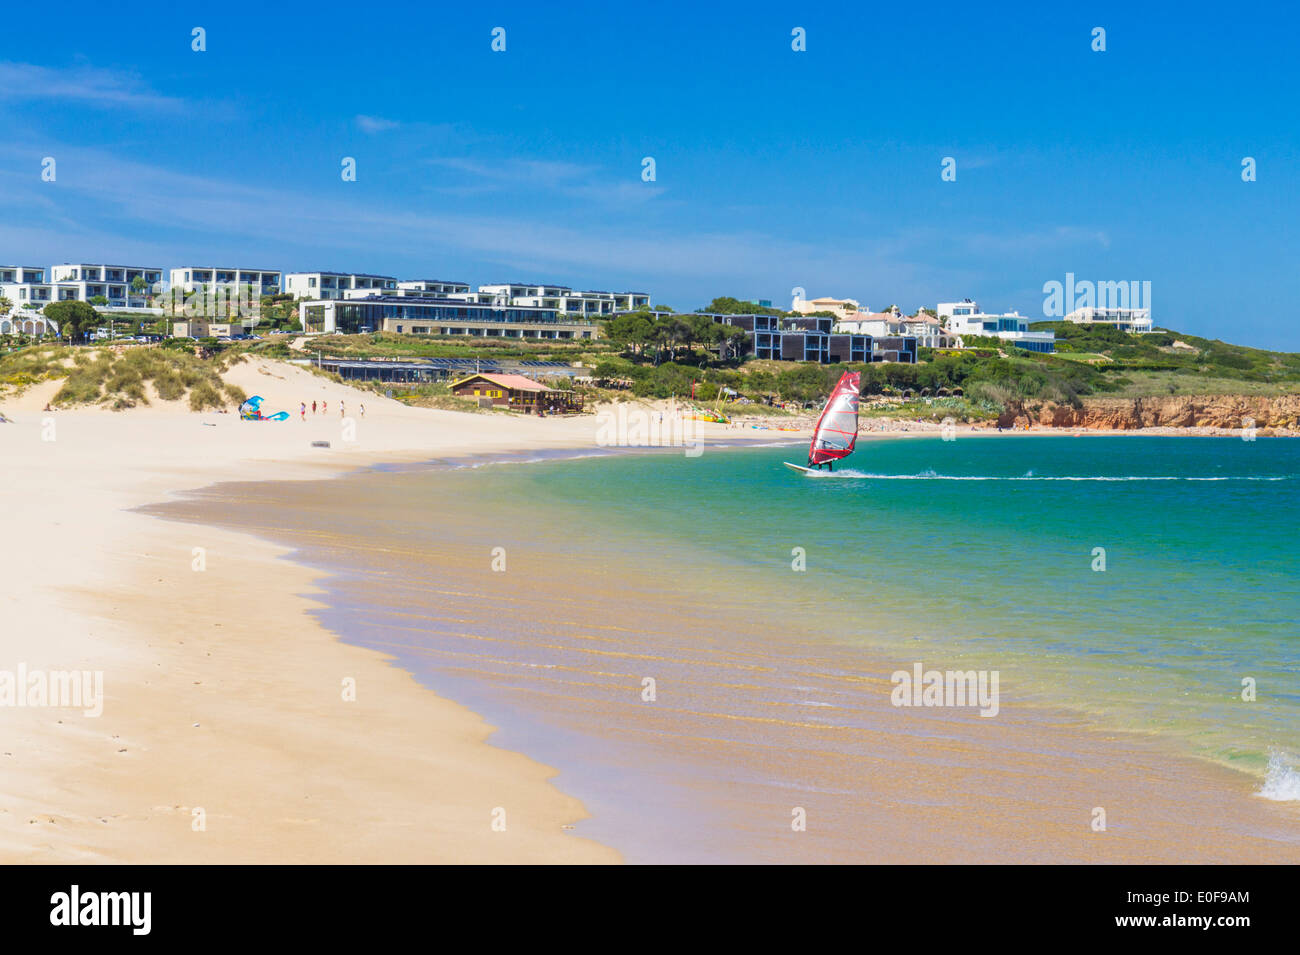 Windsurfer on Martinhal beach with martinhal beach resort hotel on the cliffs behind Sagres Algarve Portugal EU Europe Stock Photo